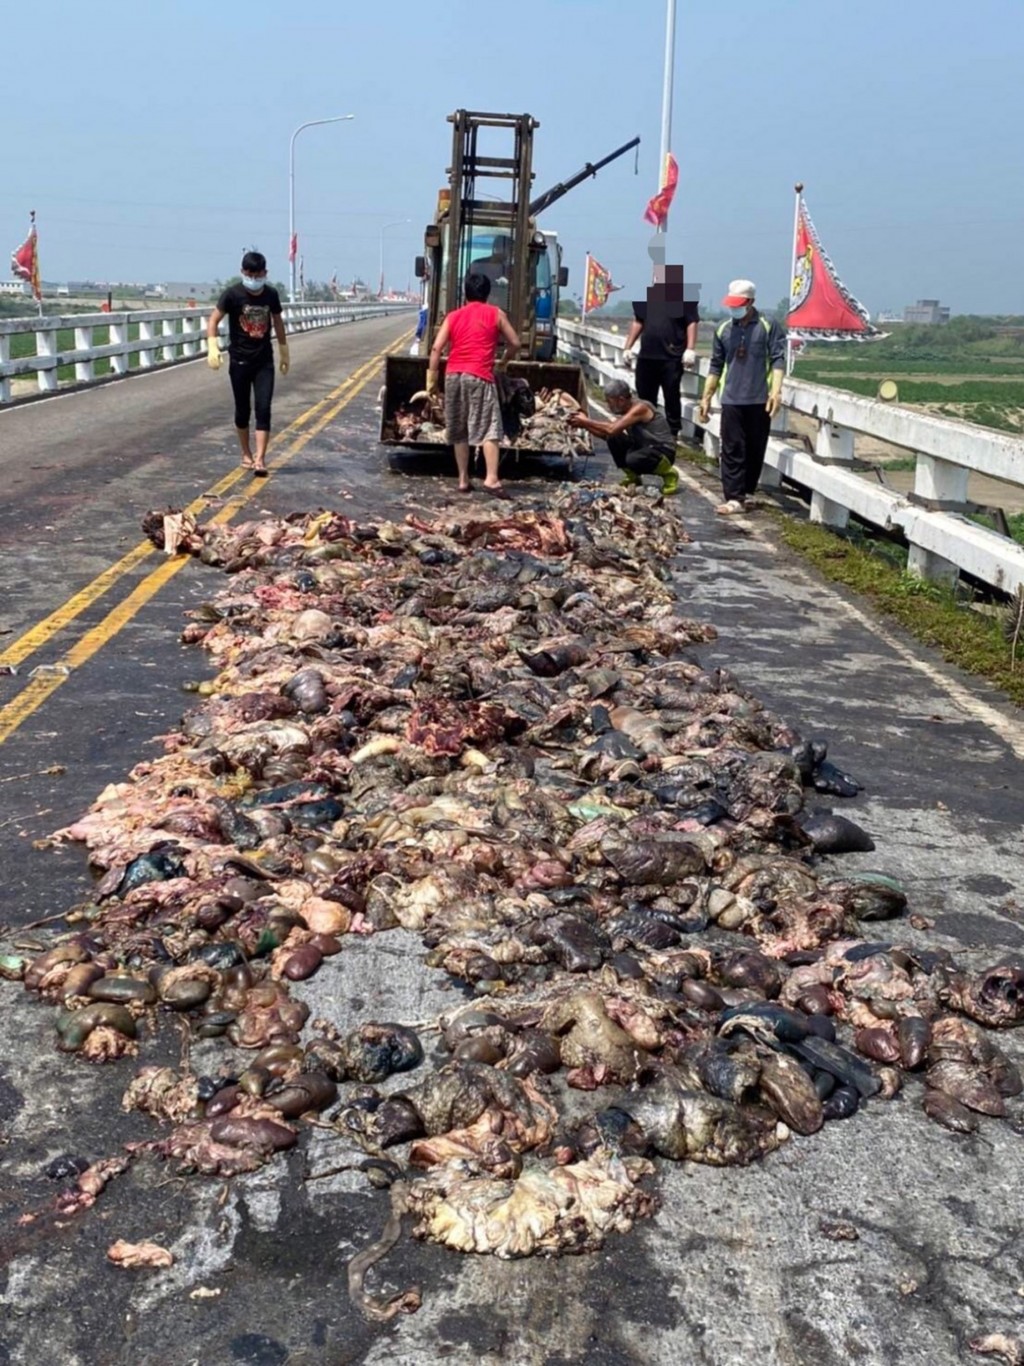 Photos show pig organs spilled across bridge in Taiwan